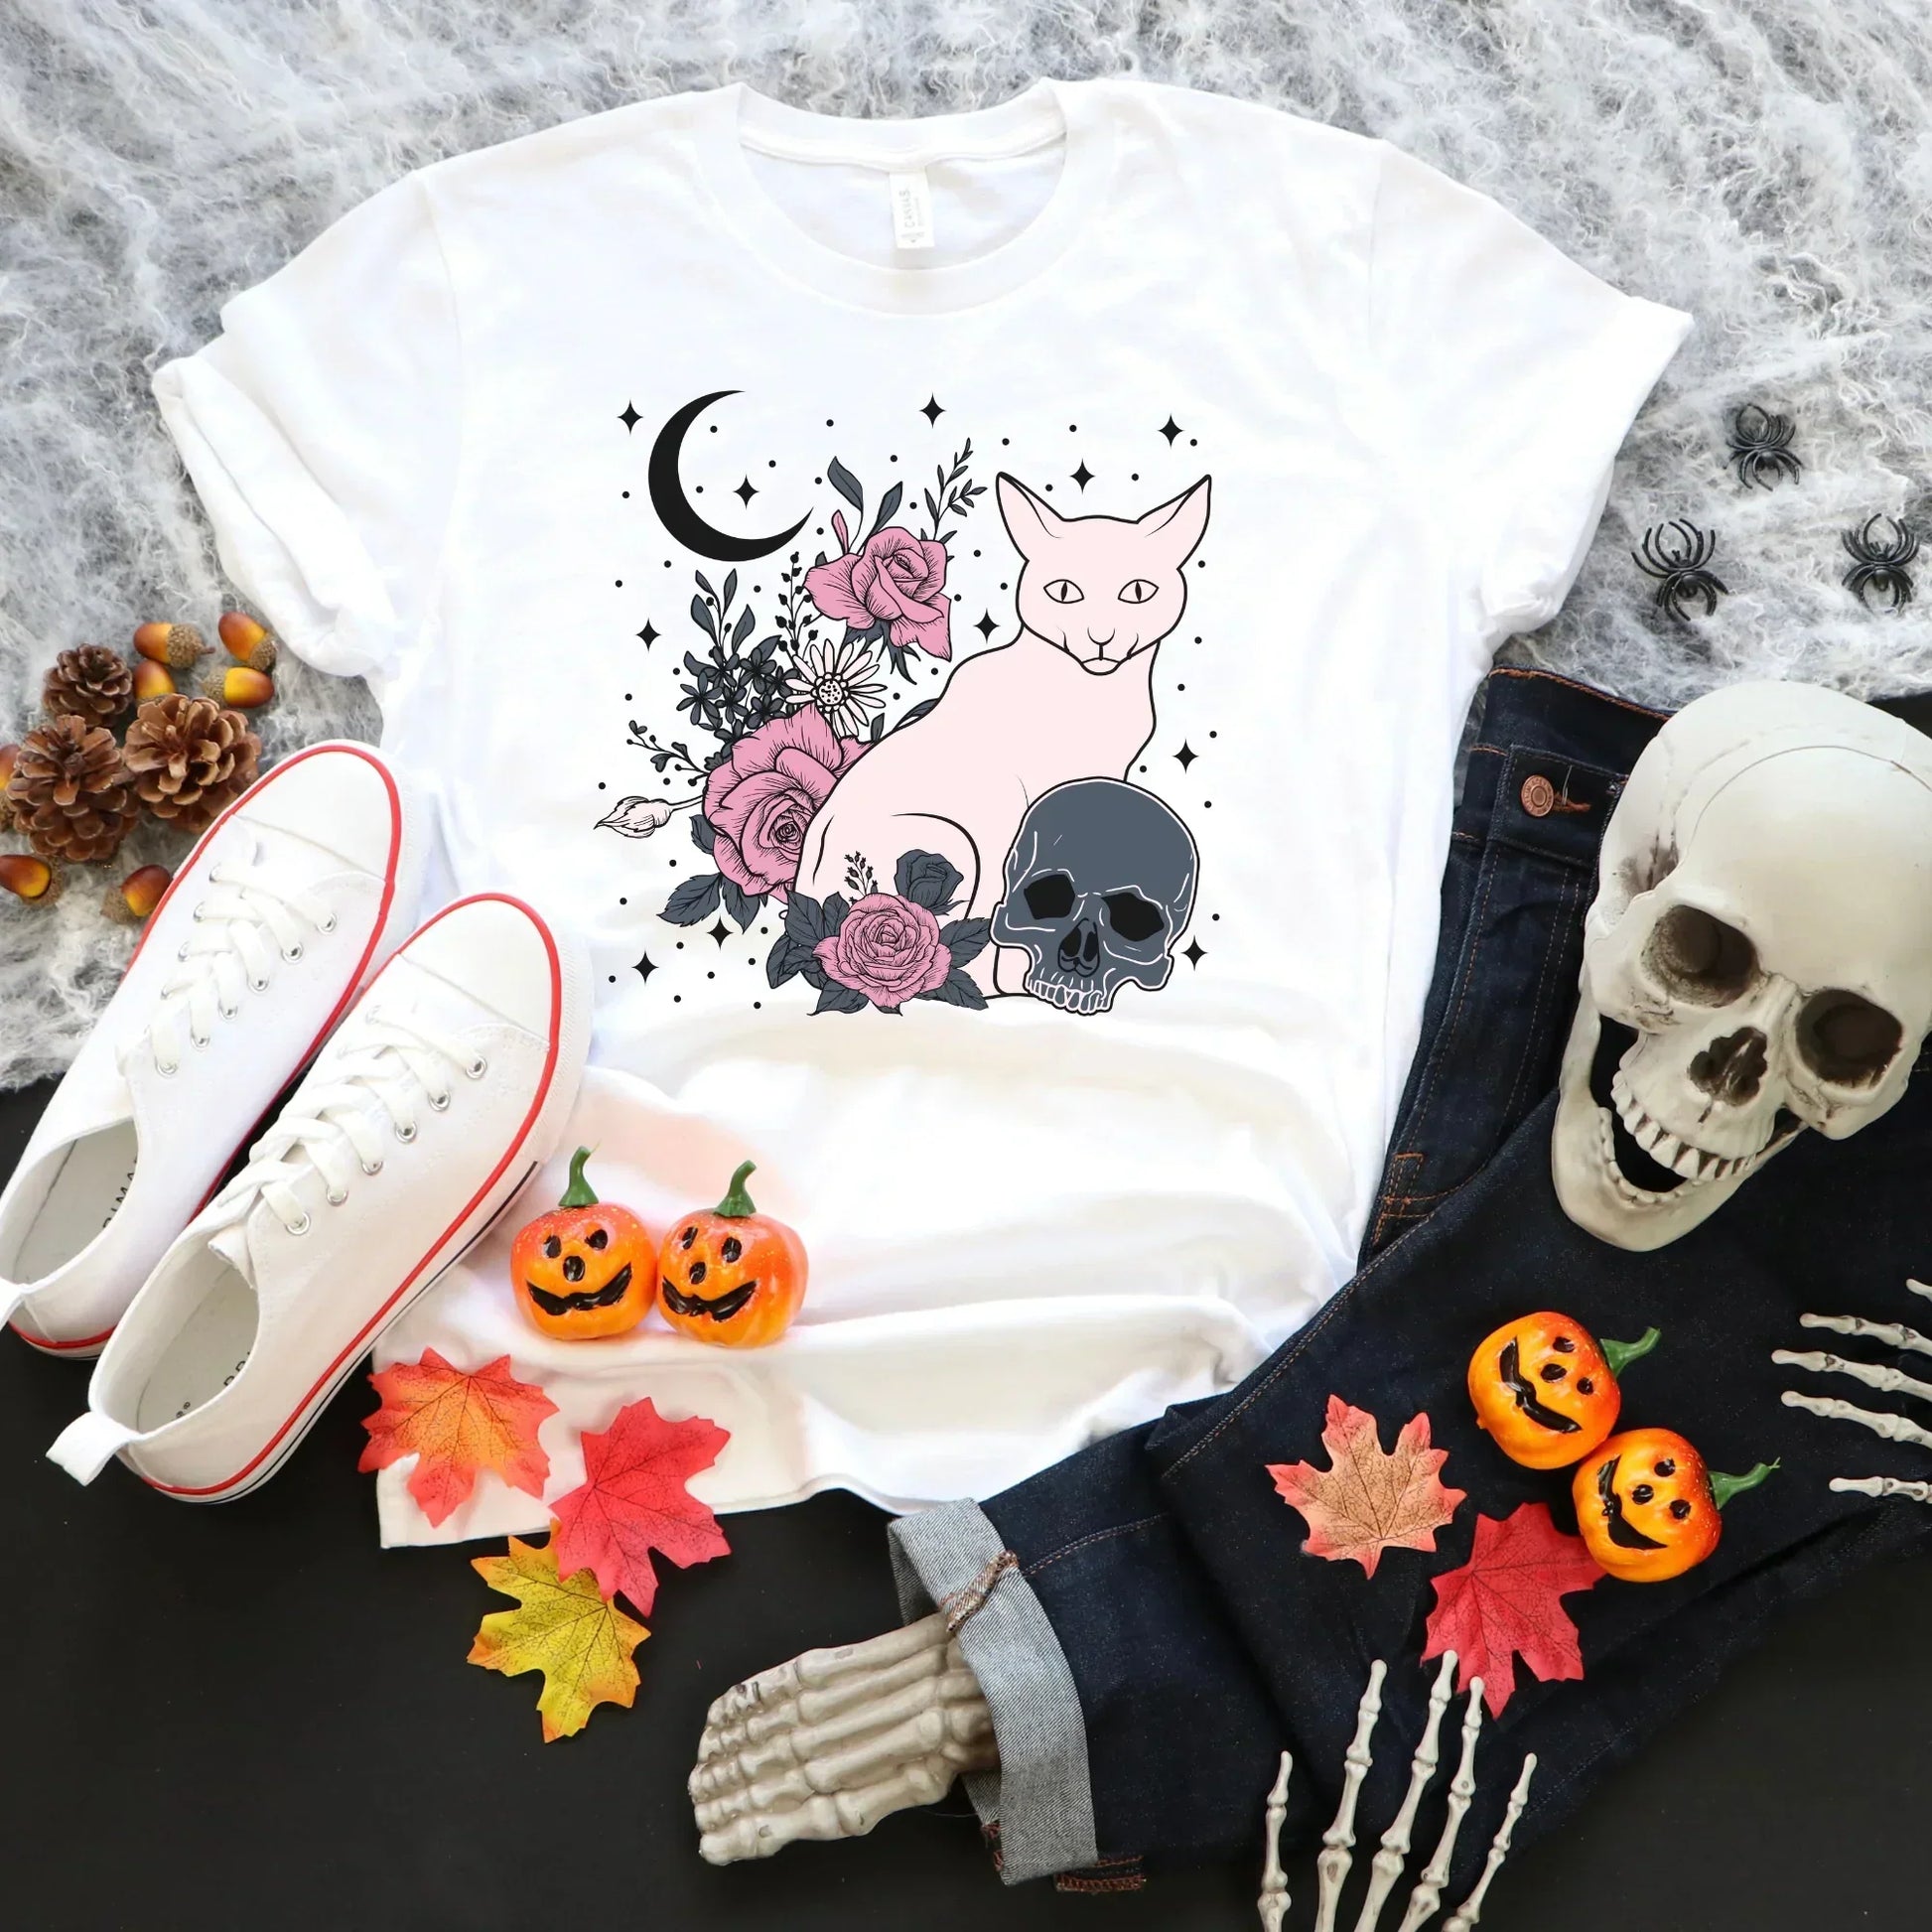 Gothic Shirt, Witchy Vibes, Halloween Sweatshirt, Moon Shirt, Skull Shirt, Goth Style Grunge Shirt, Aesthetic Clothing, Cat Shirt, Witch Tee HMDesignStudioUS